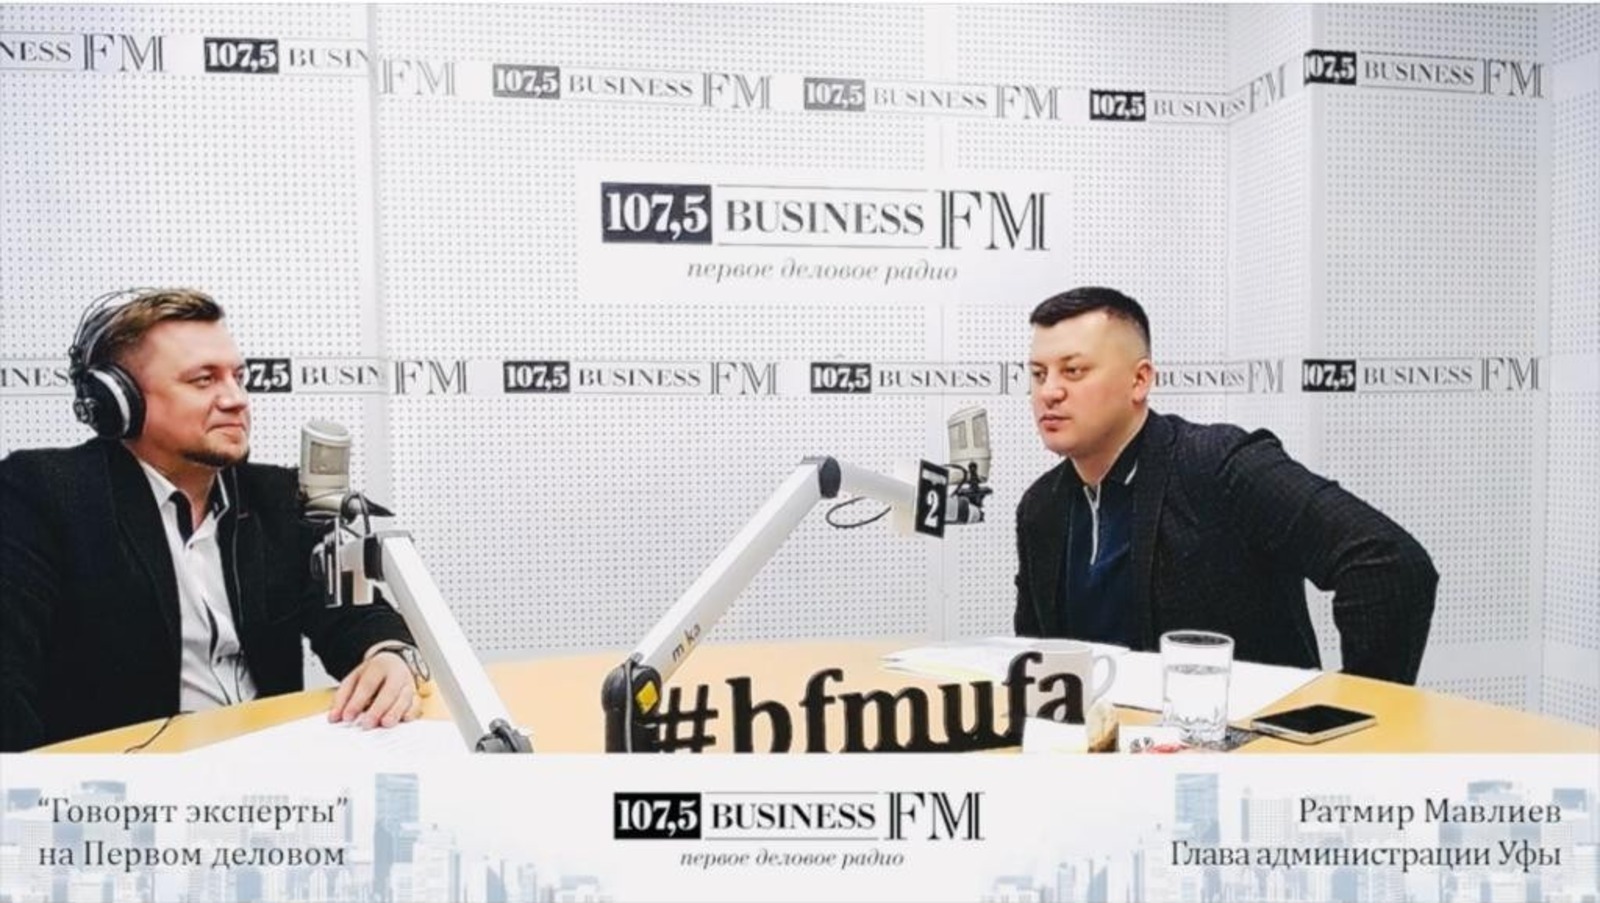 Business FM Өфө сайты